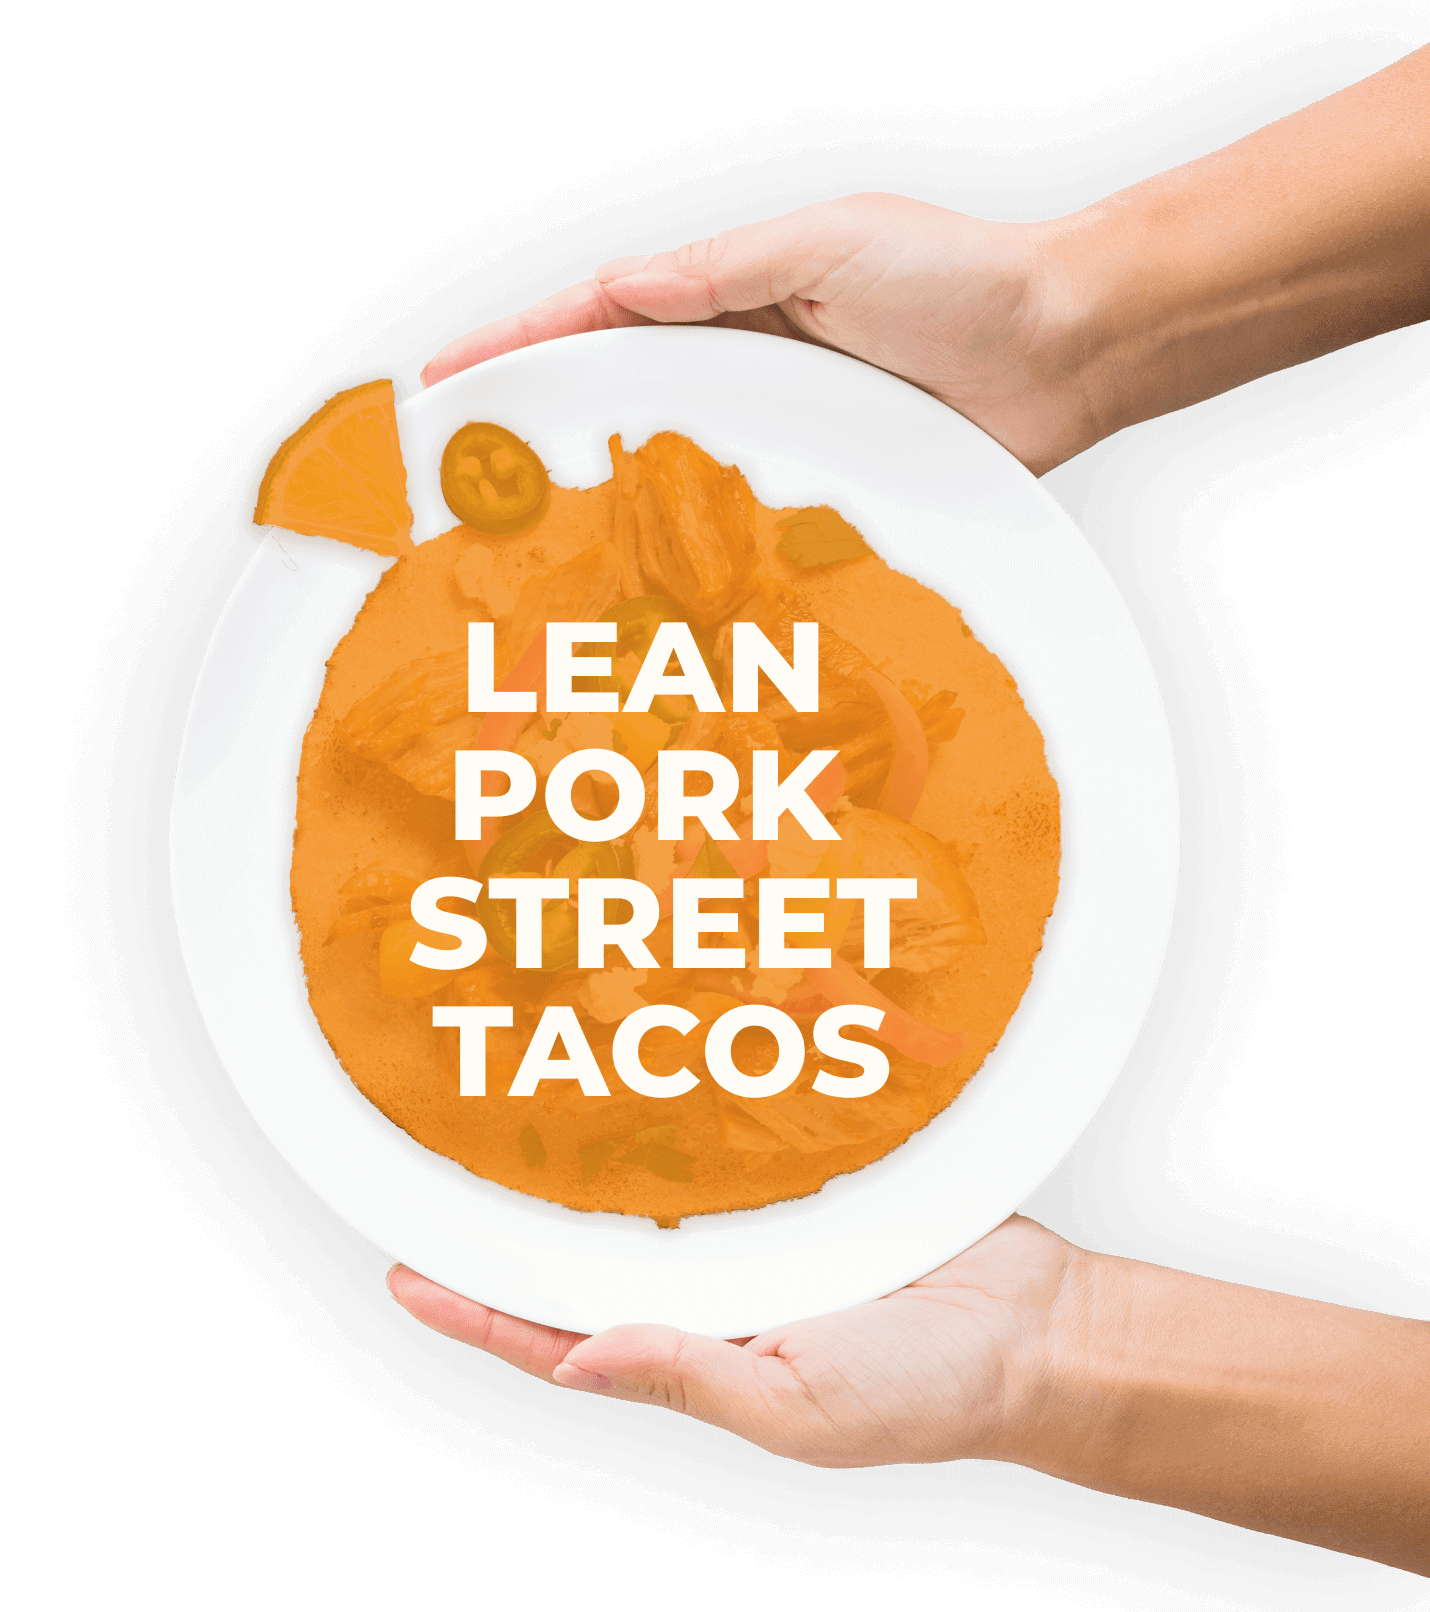 Lean pork street taco hover state